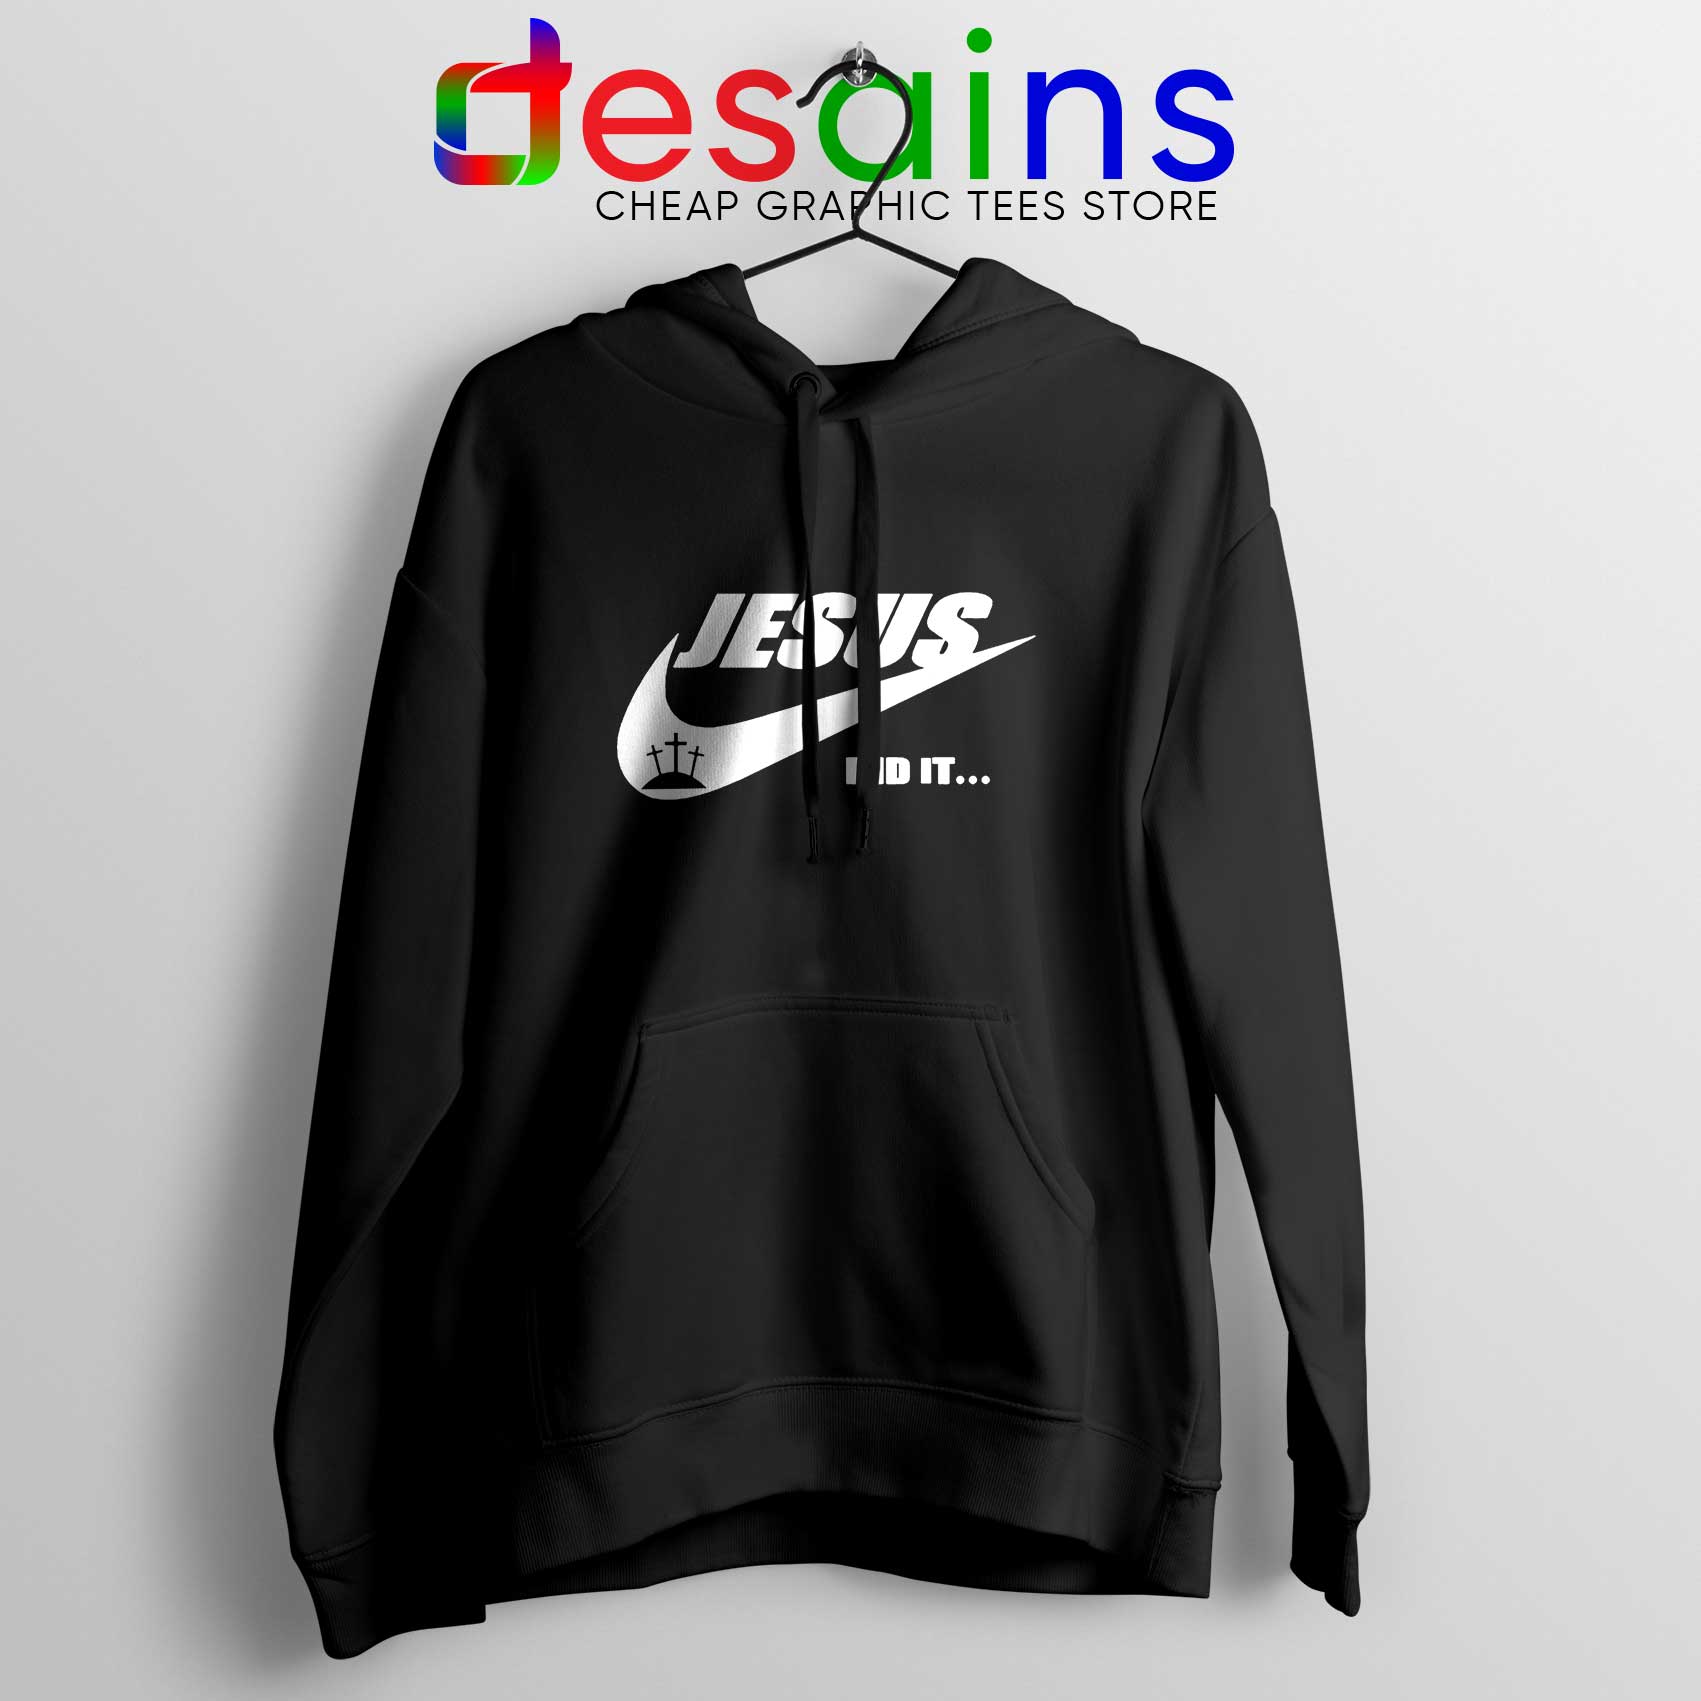 Did It Hoodie Nike Just Do it Logo - DESAINS STORE